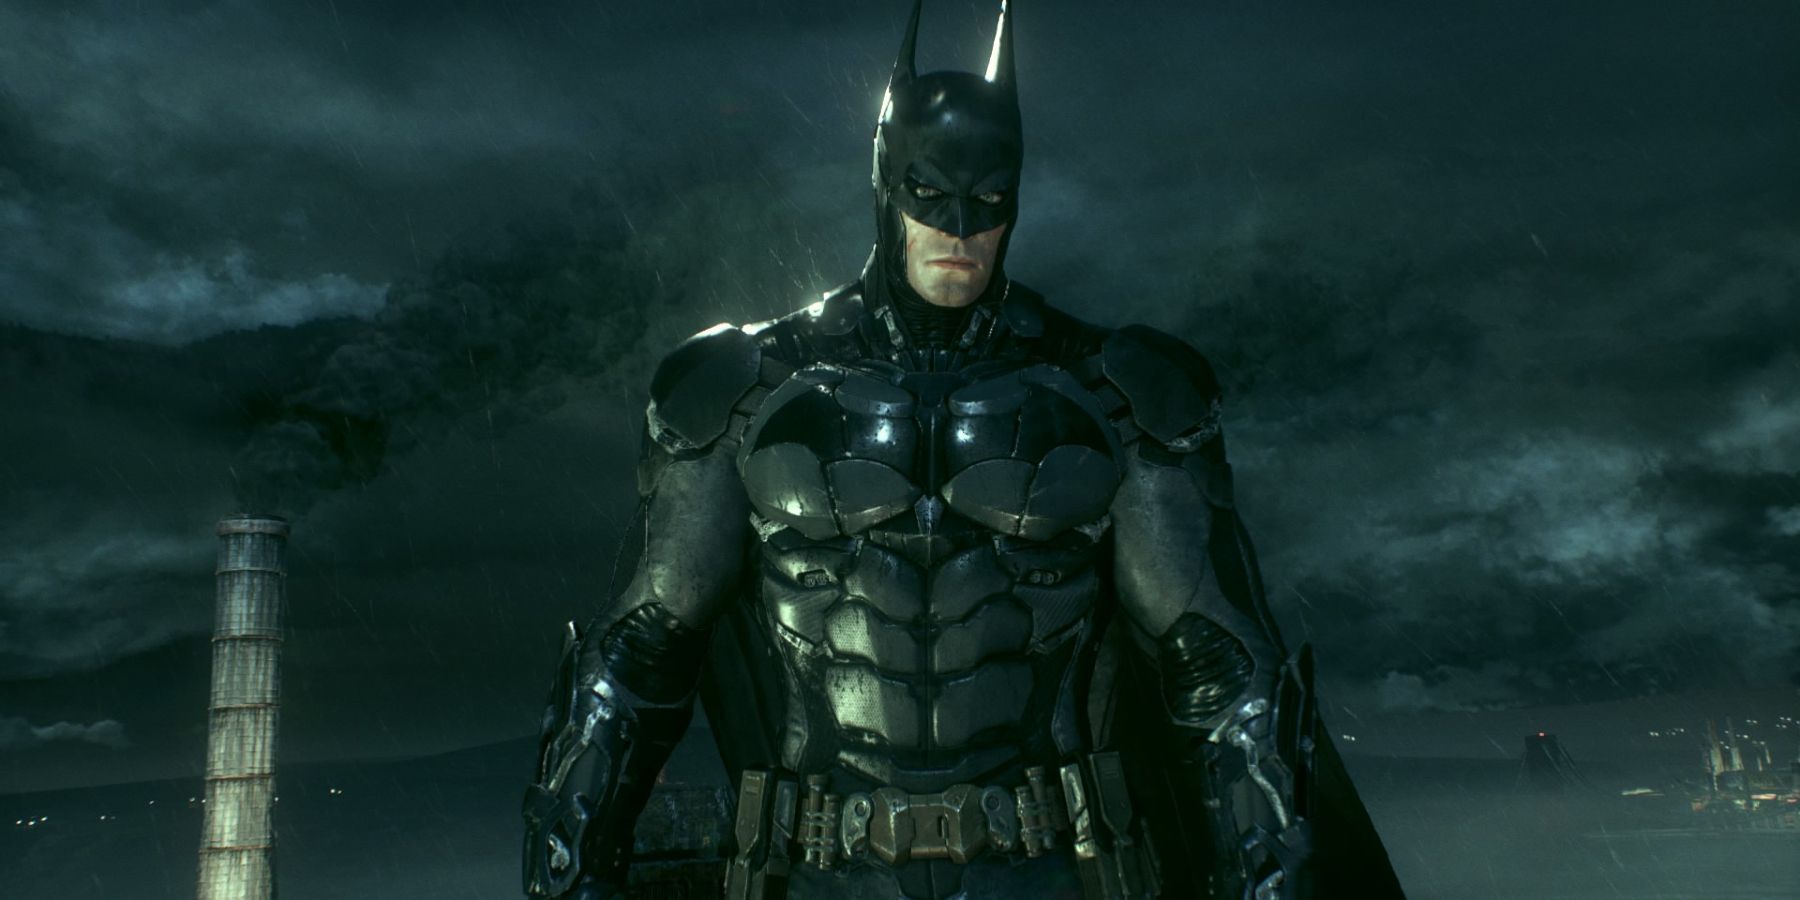 Batman In The High-Tech Batsuit V804 - Batman Arkham Knight